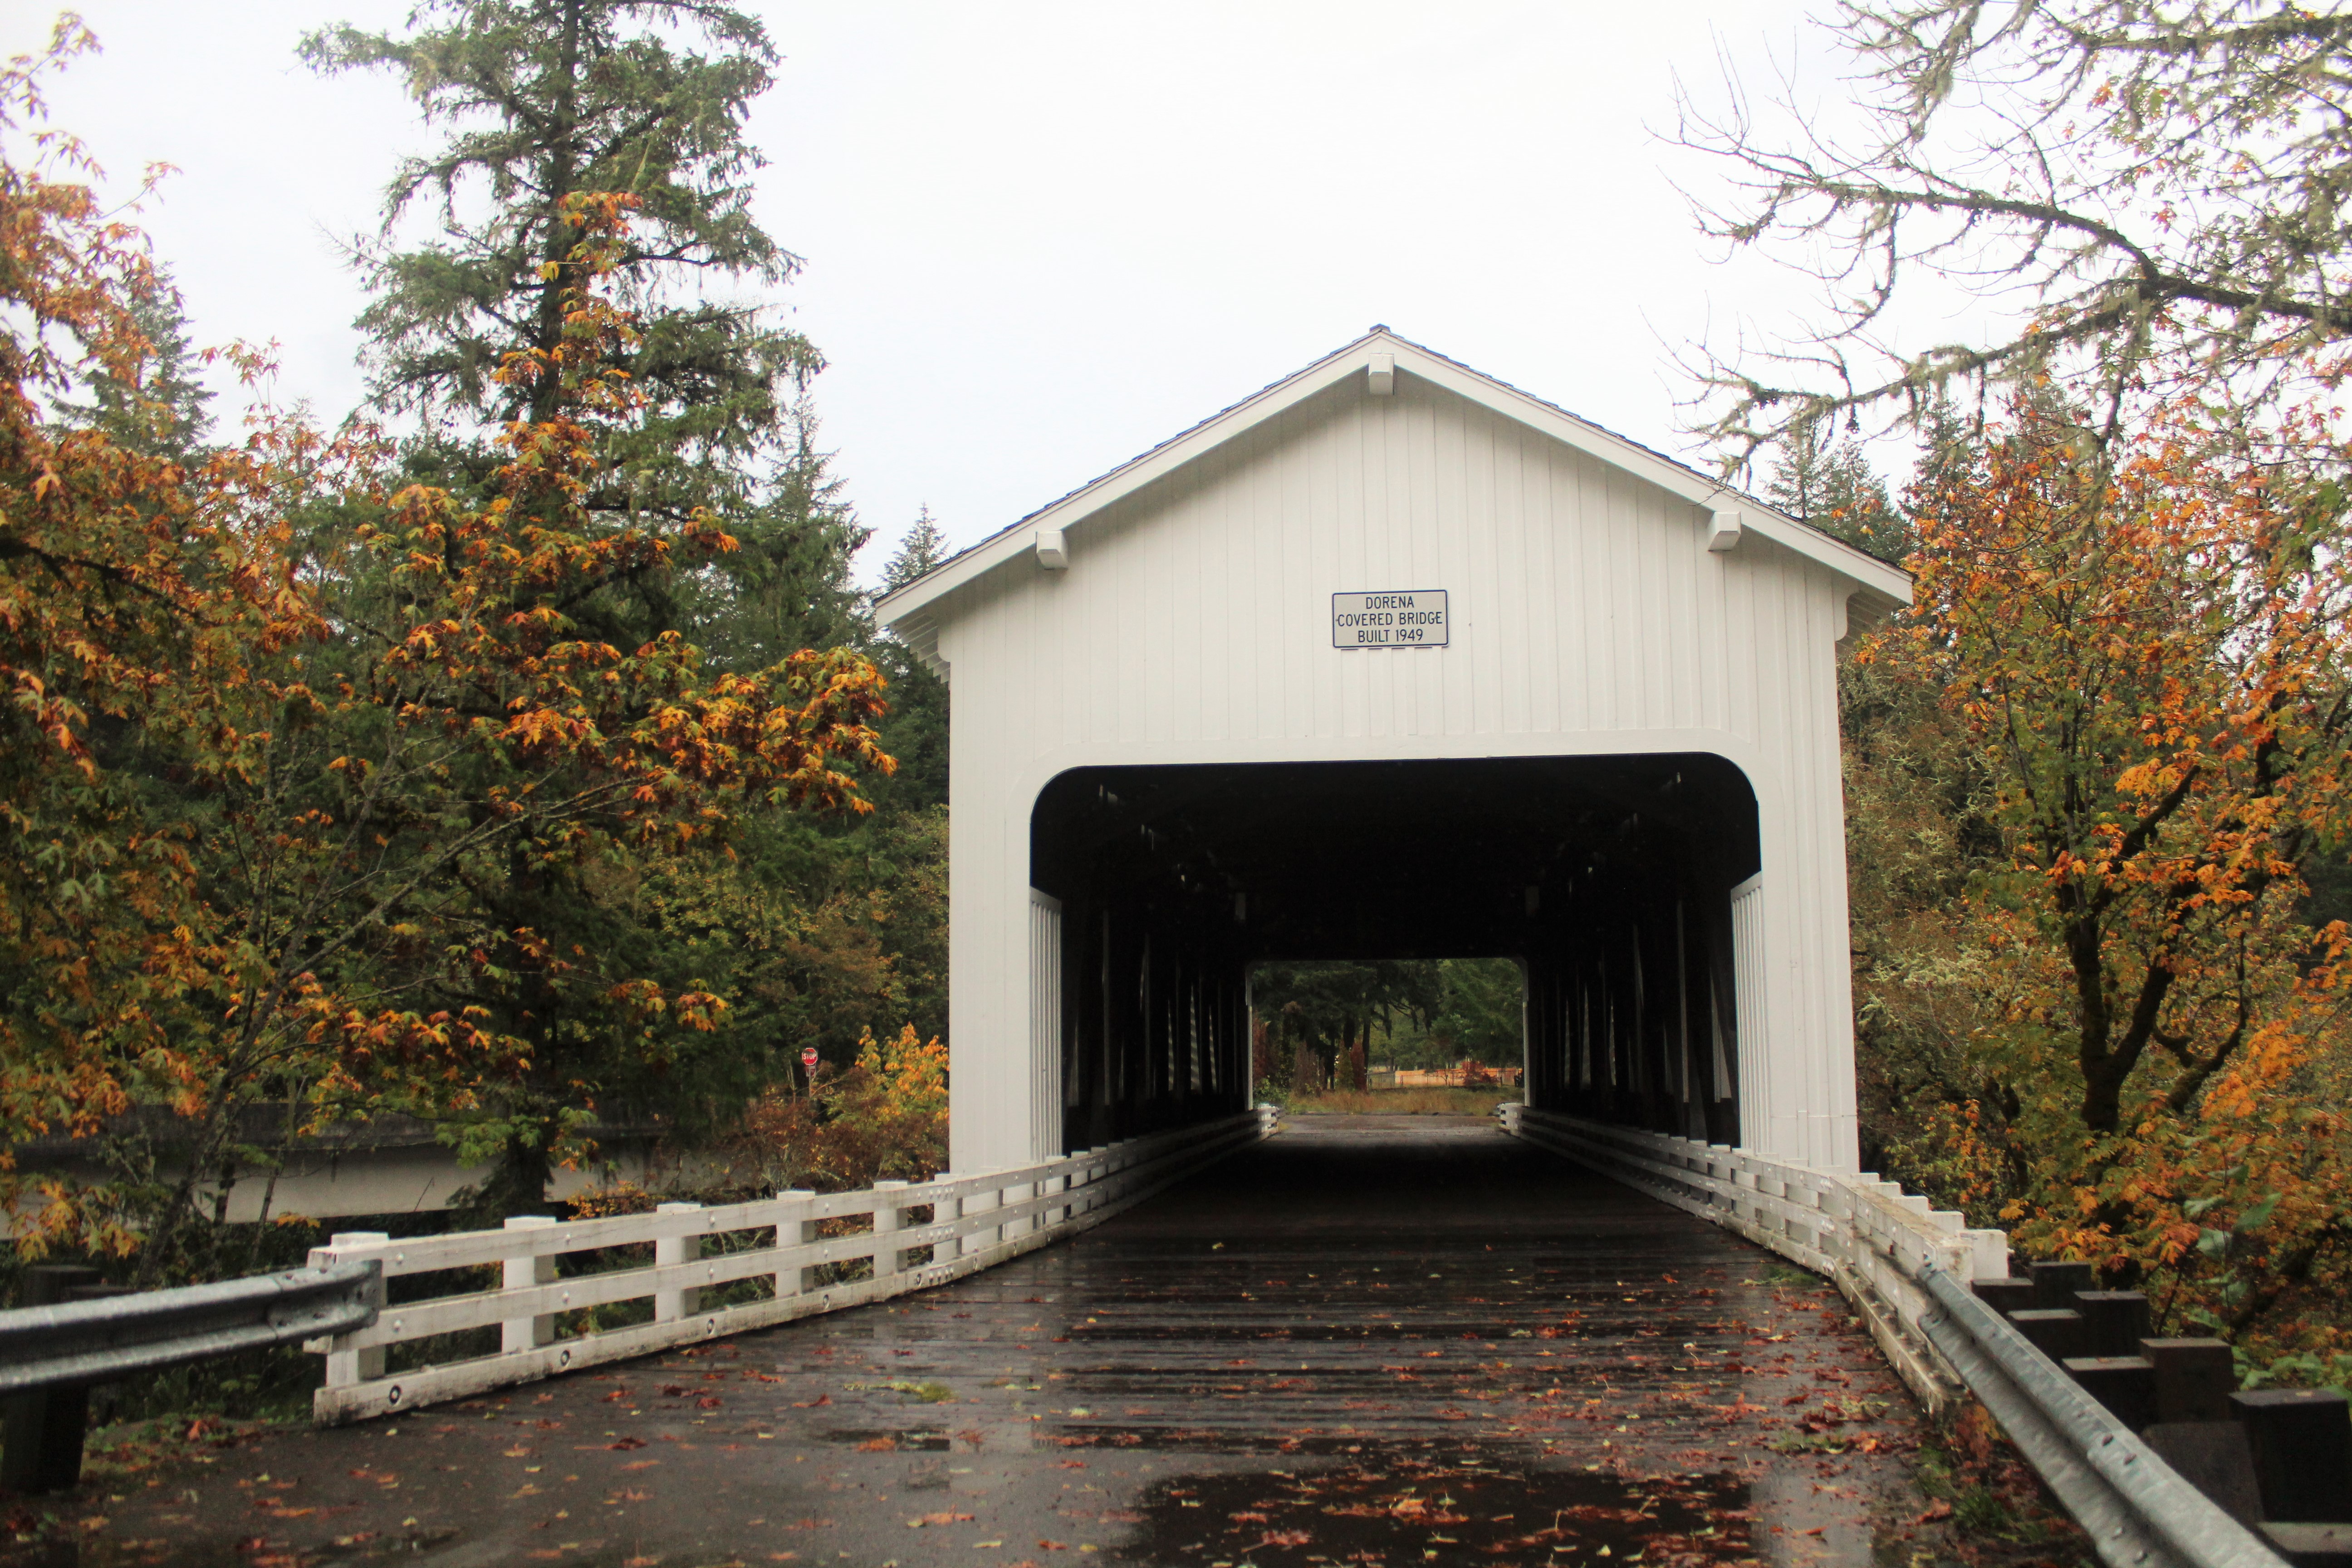 Dorena Bridge in Cottage Grove, photo by Carrie Uffindell